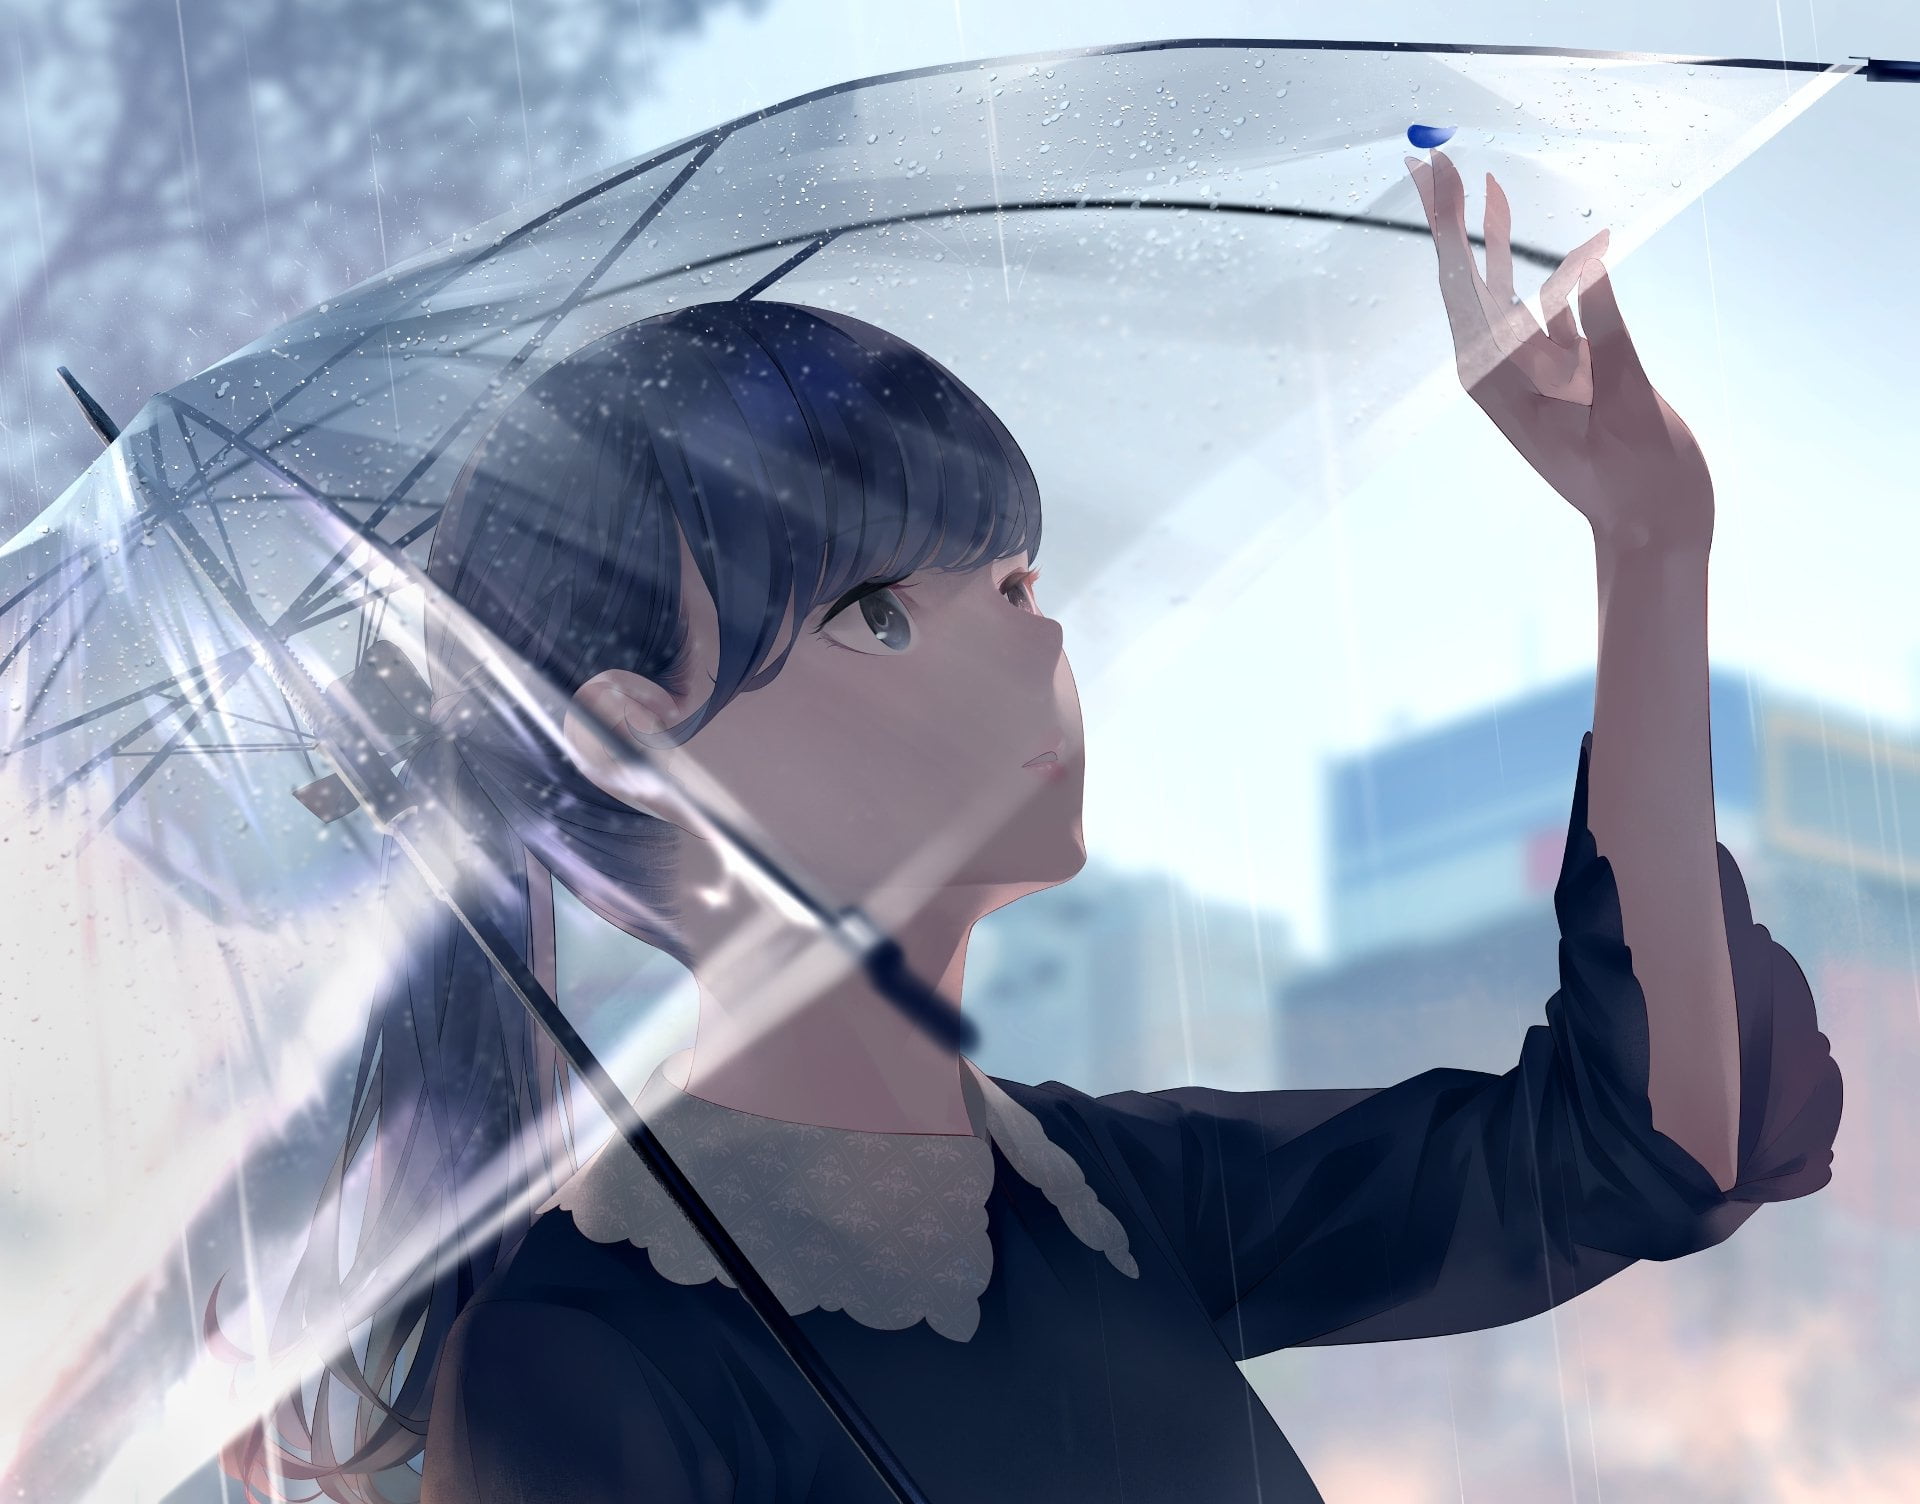 Anime, Original, one person, portrait, headshot, holding, umbrella